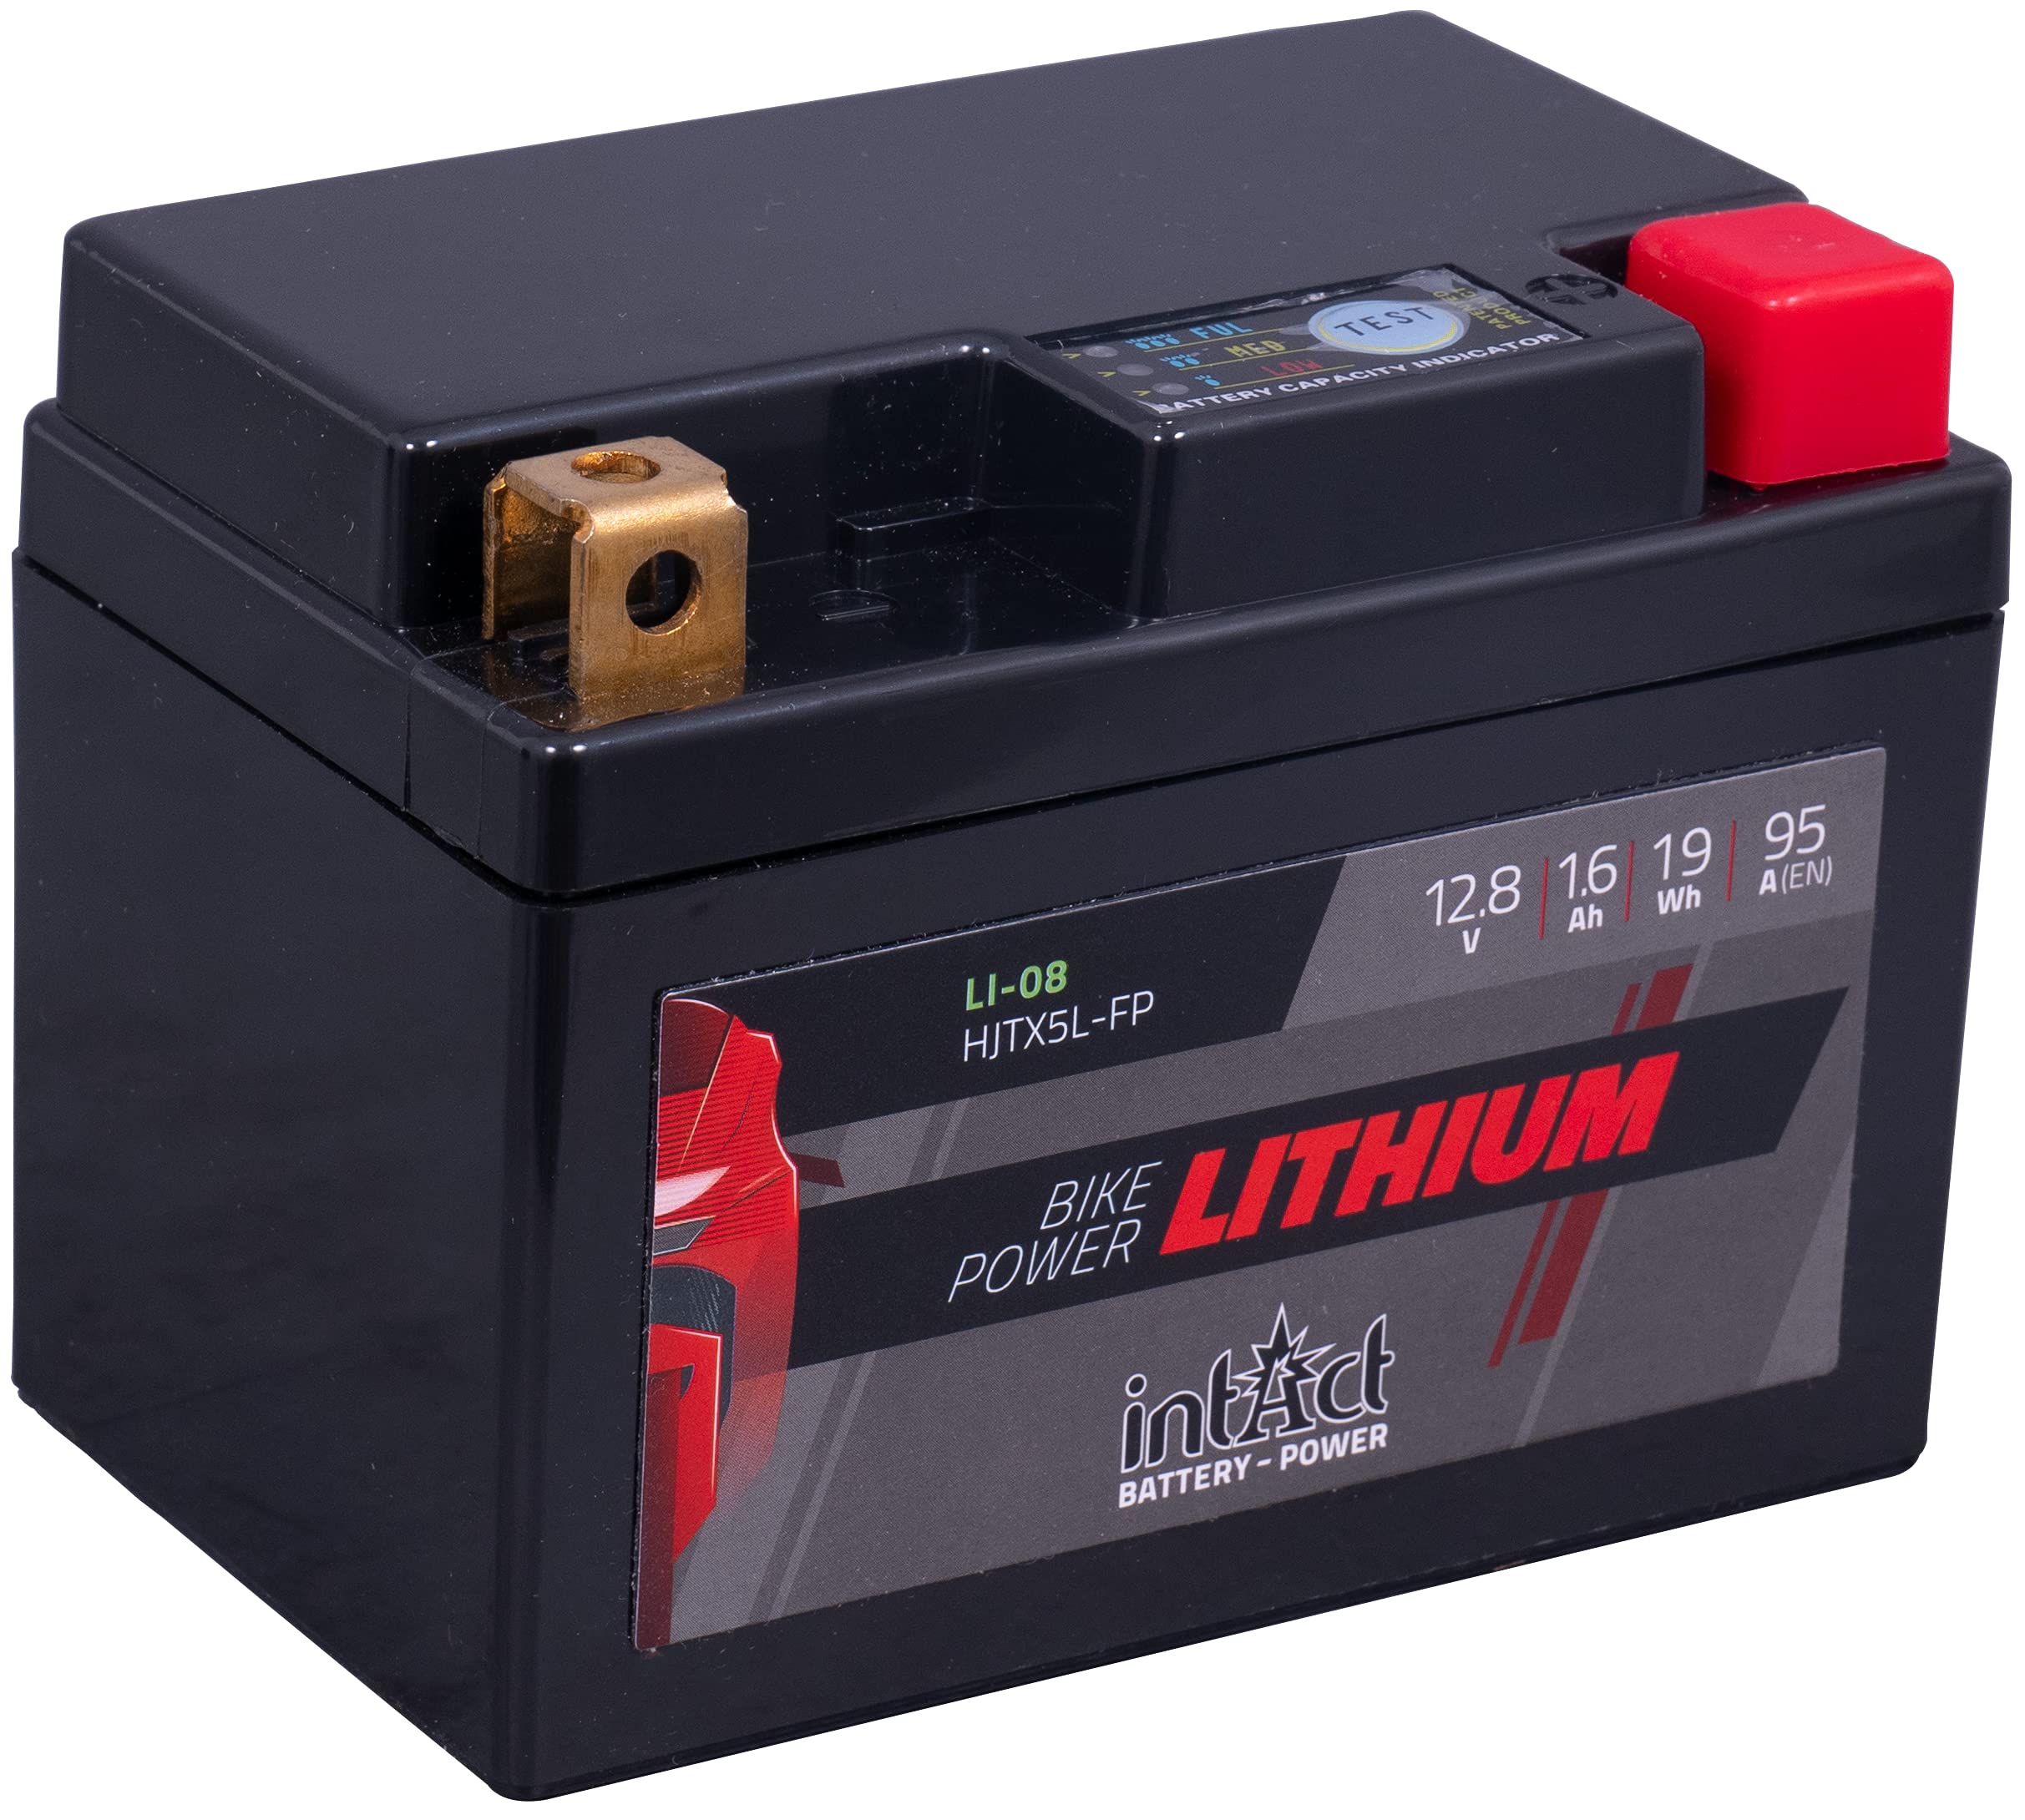 intAct - LITHIUM MOTORRADBATTERIE | Batterie für Roller, Motorrad, Quads uvm. Bis zu 75% Gewichtseinsparung | Bike-Power LI-08, HJTX5L-FP, 12,8V Batterie, 1,6 AH (c10), 19 Wh, 95 A (CCA) | Maße: 113x70x85mm